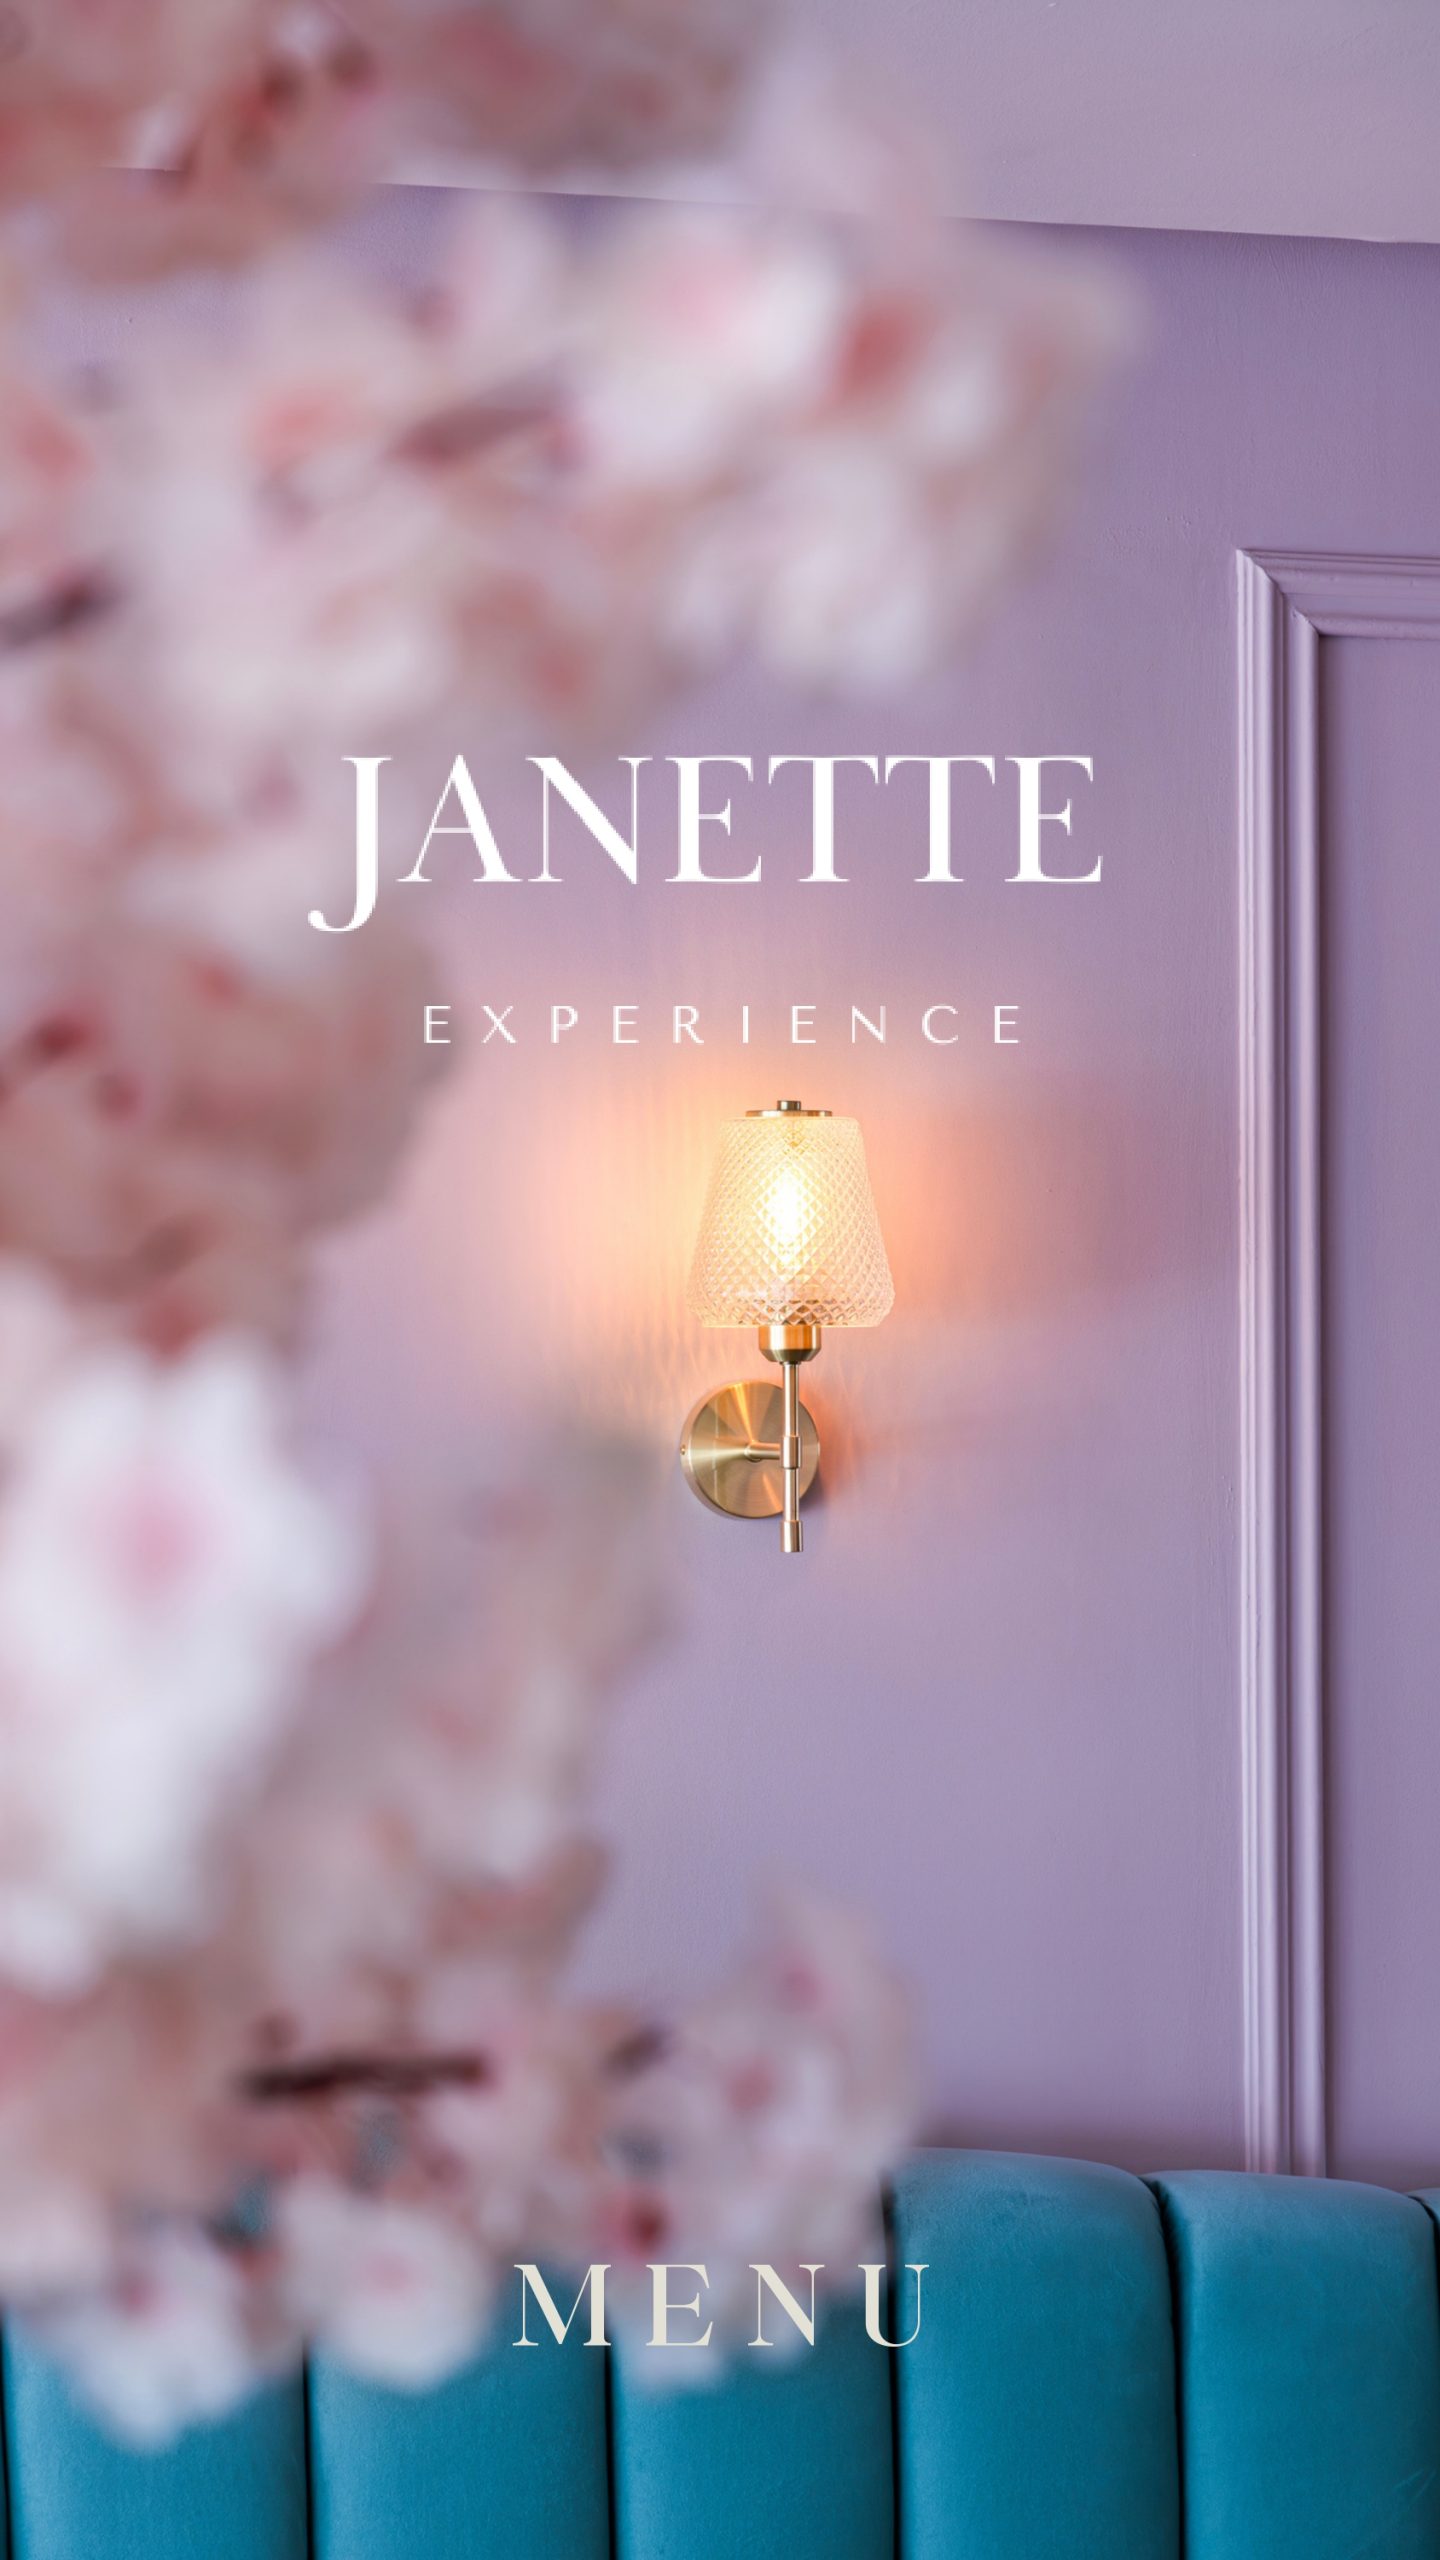 Janette menu digital PT.pdf_page-0001